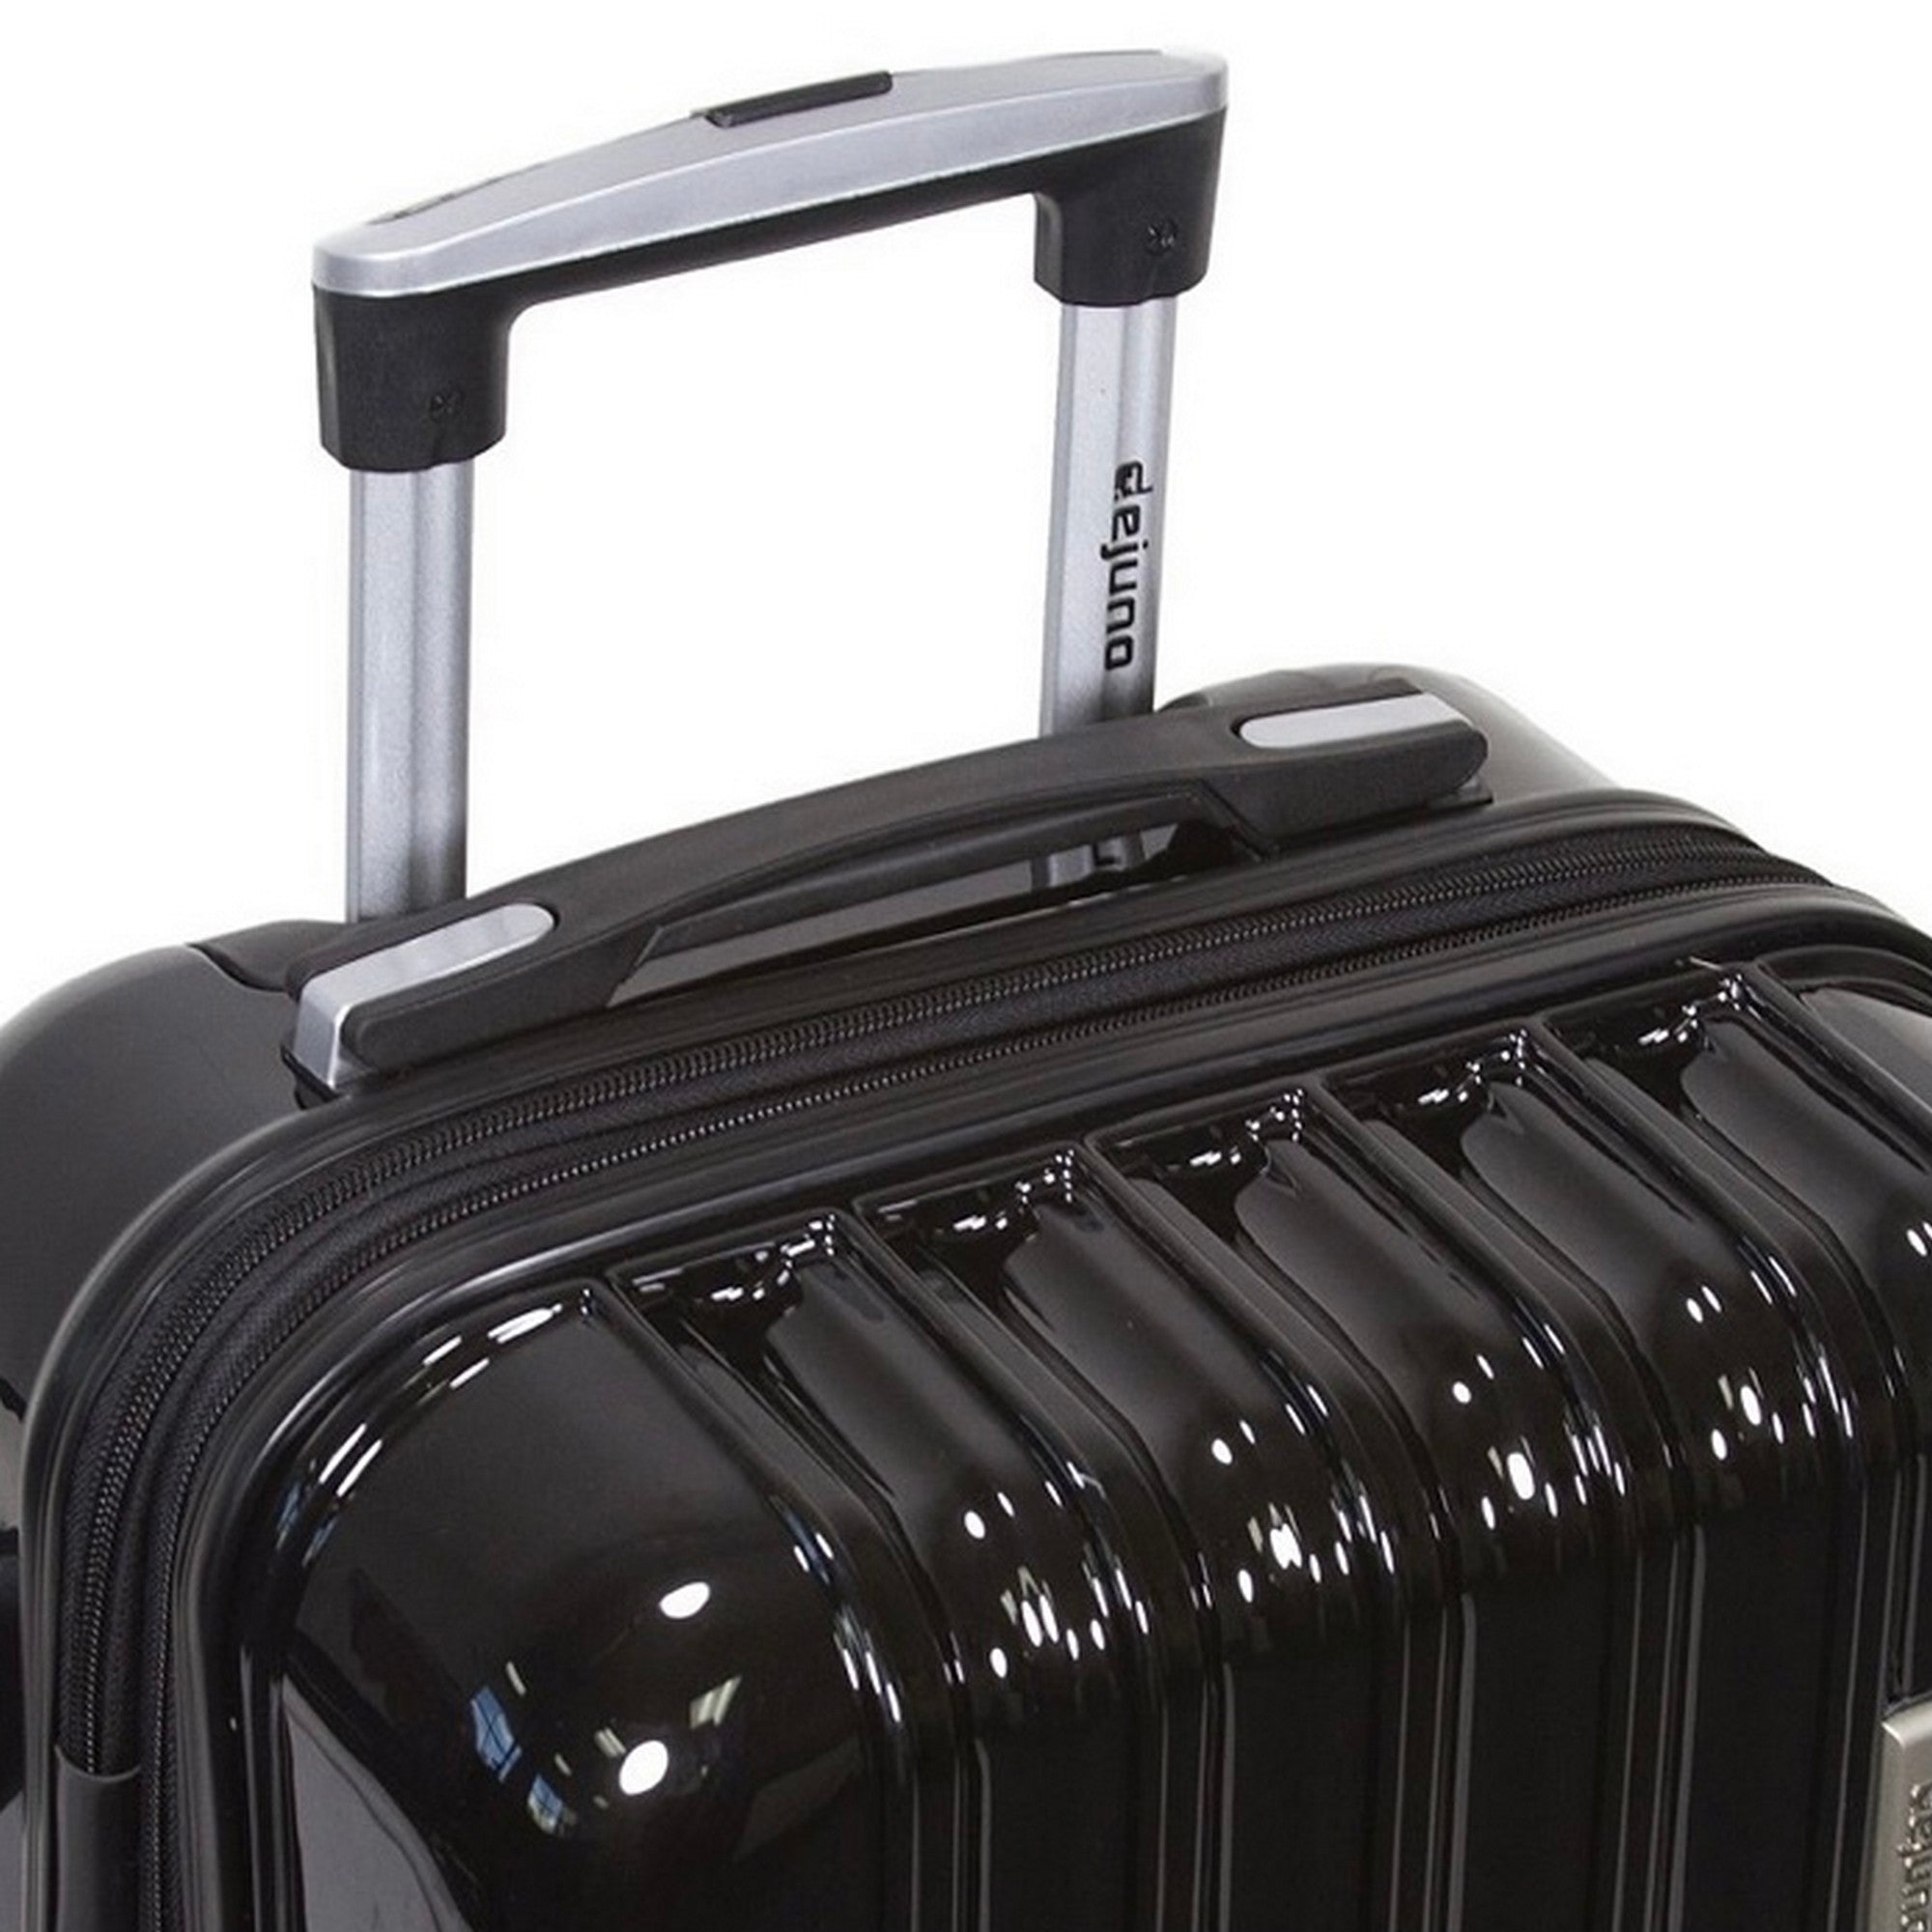 Dejuno Titan Jumbo Hardside 3-PC Spinner Luggage Set With TSA Lock